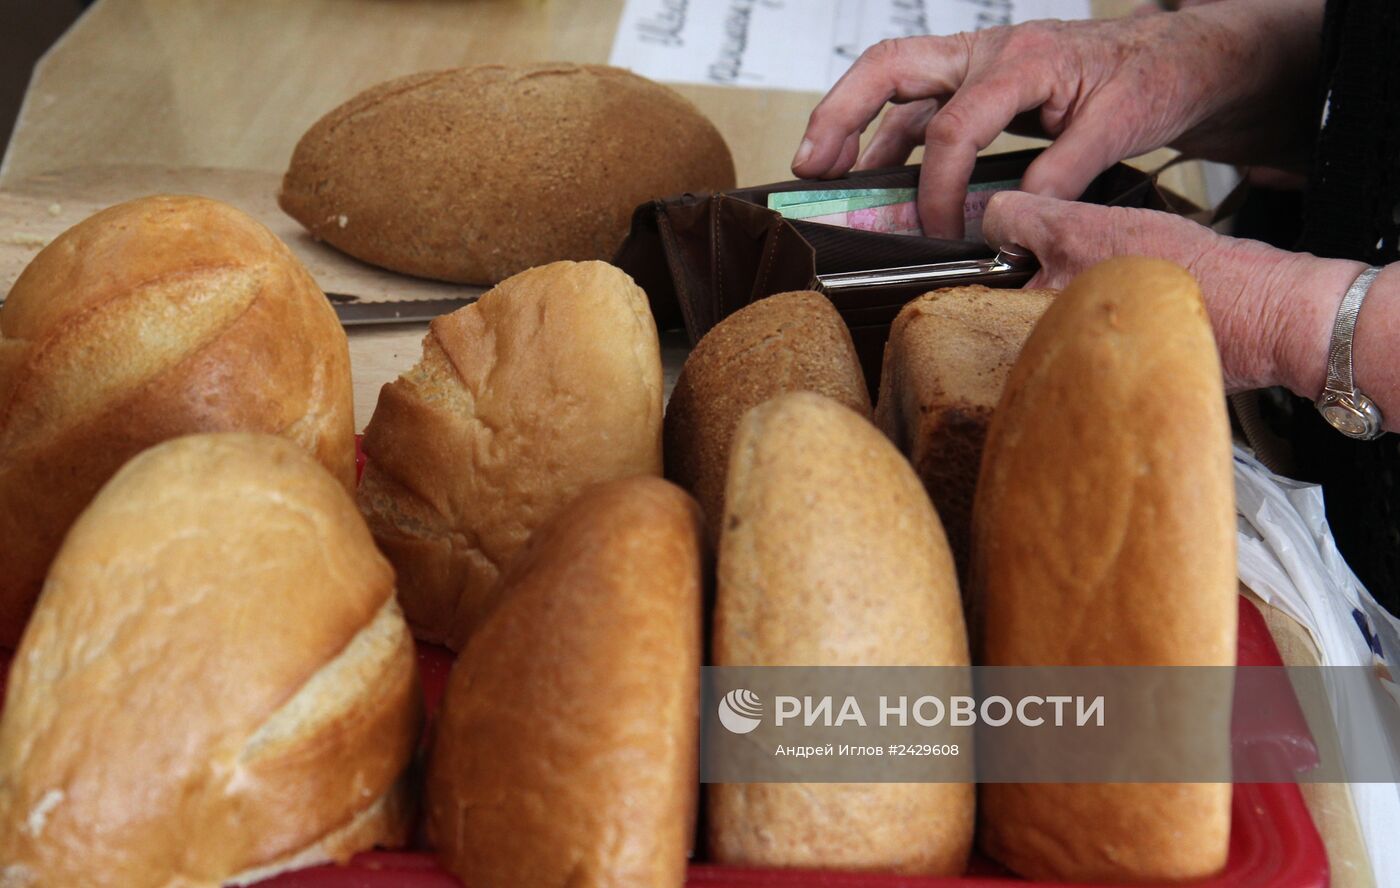 Продажа хлеба в Симферополе